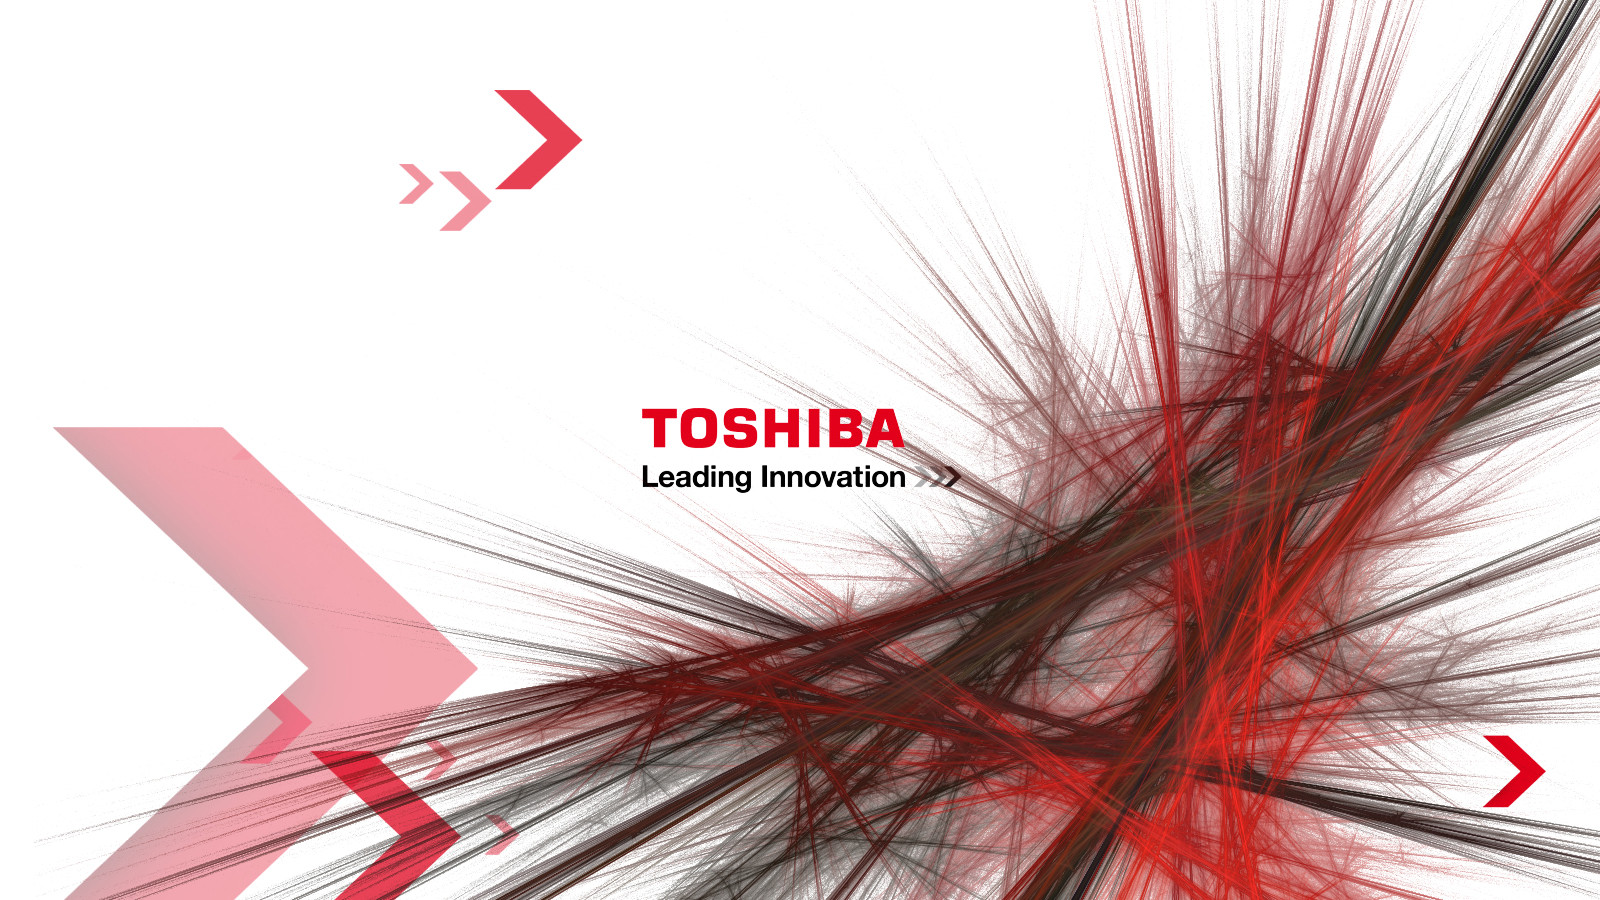 Toshiba Background Wallpaper | Best Wallpaper Background